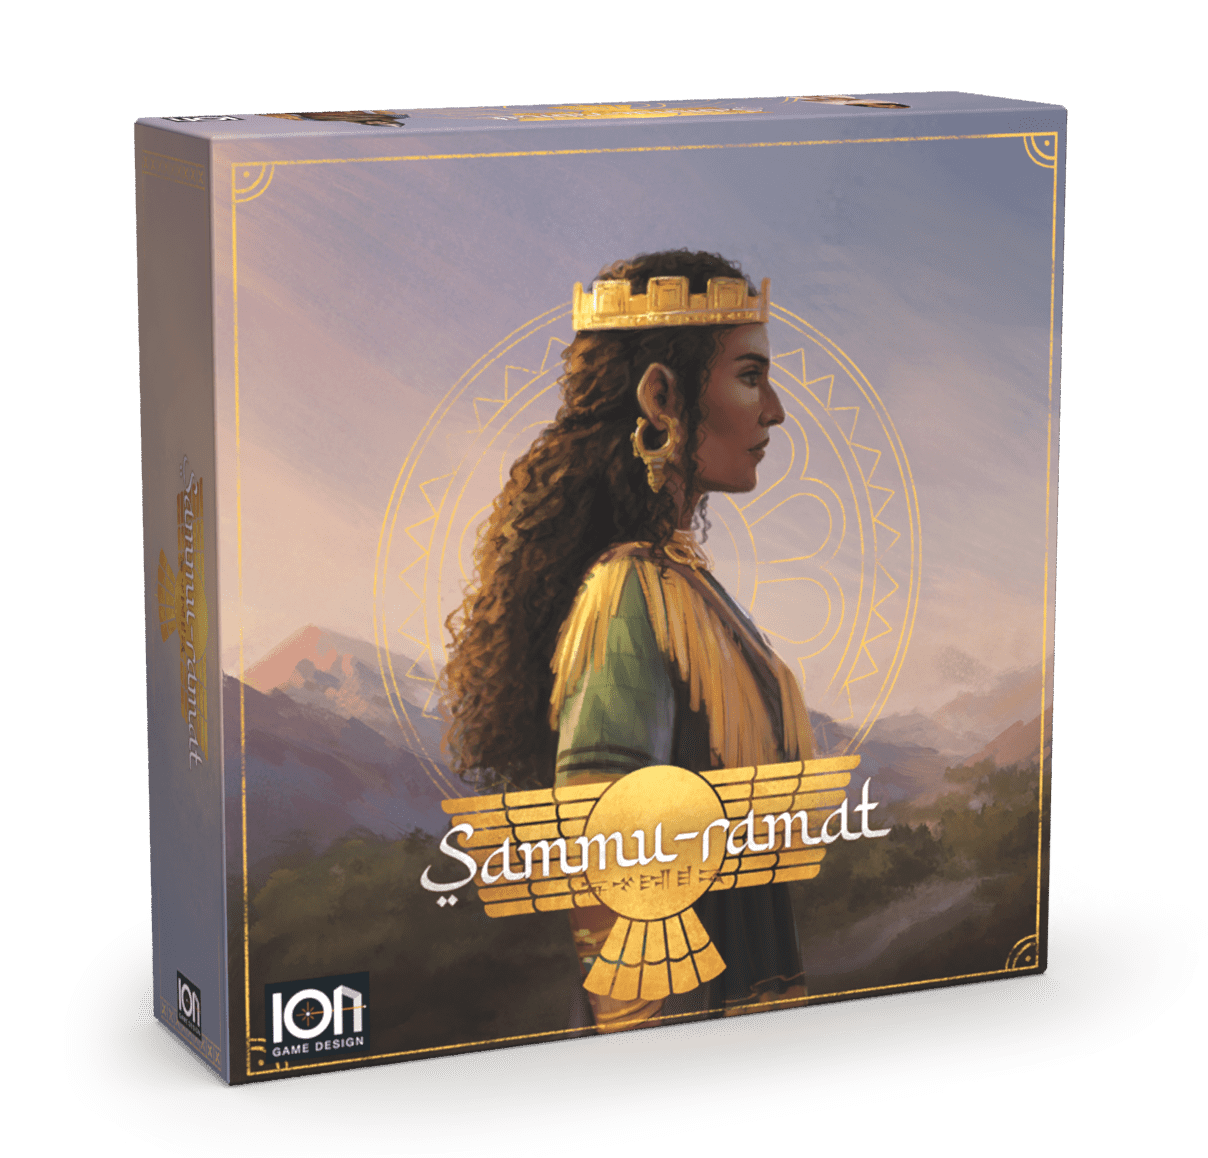 Sammu-Ramat Board Game - 3D box cover design